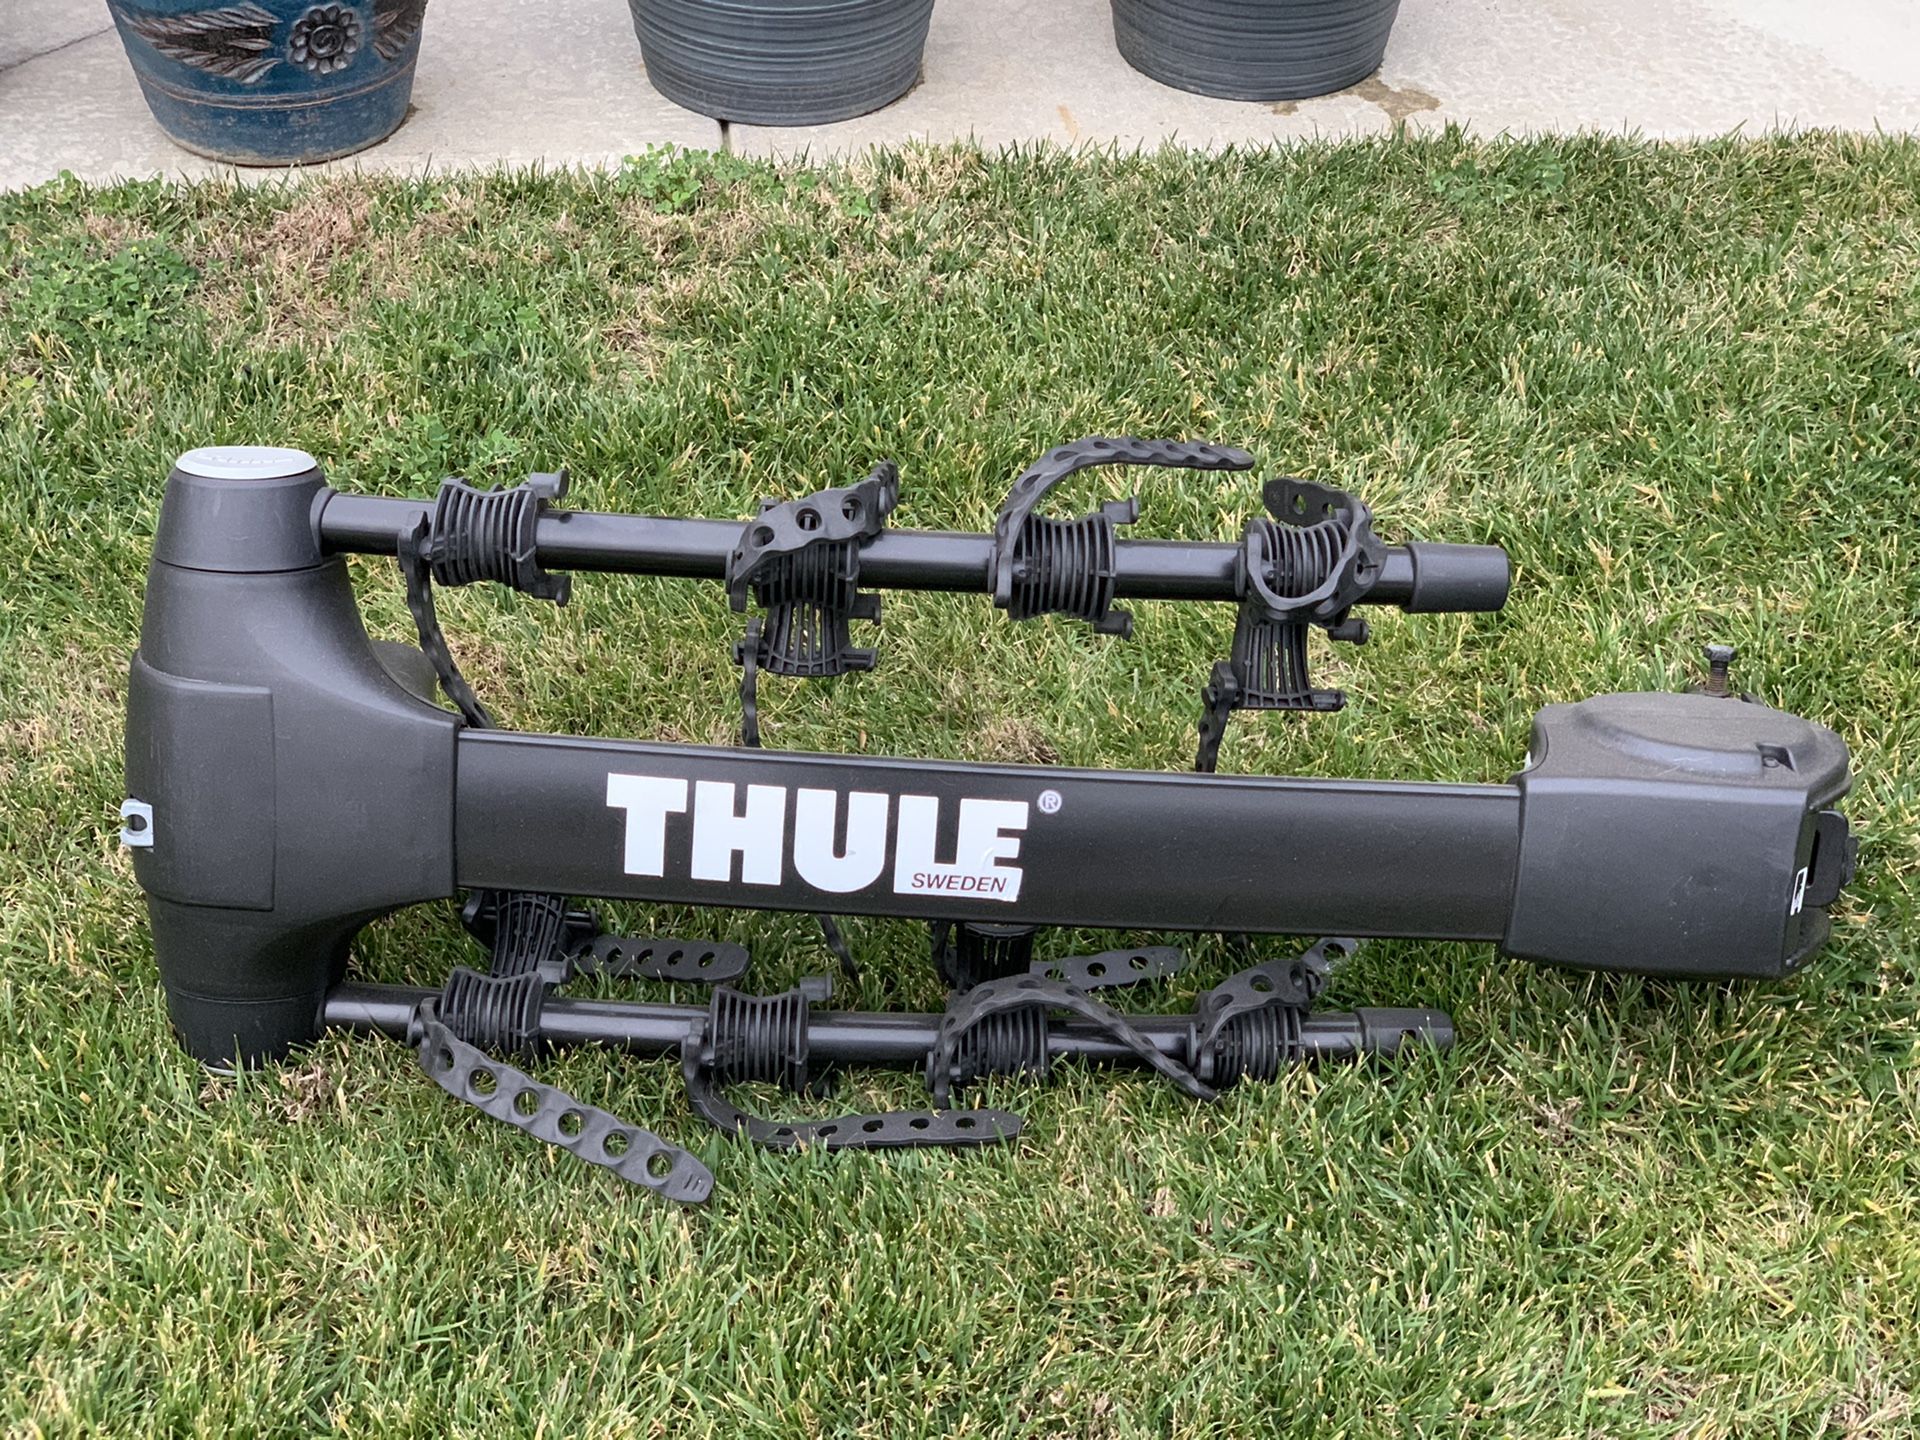 Thule 4 bike rack